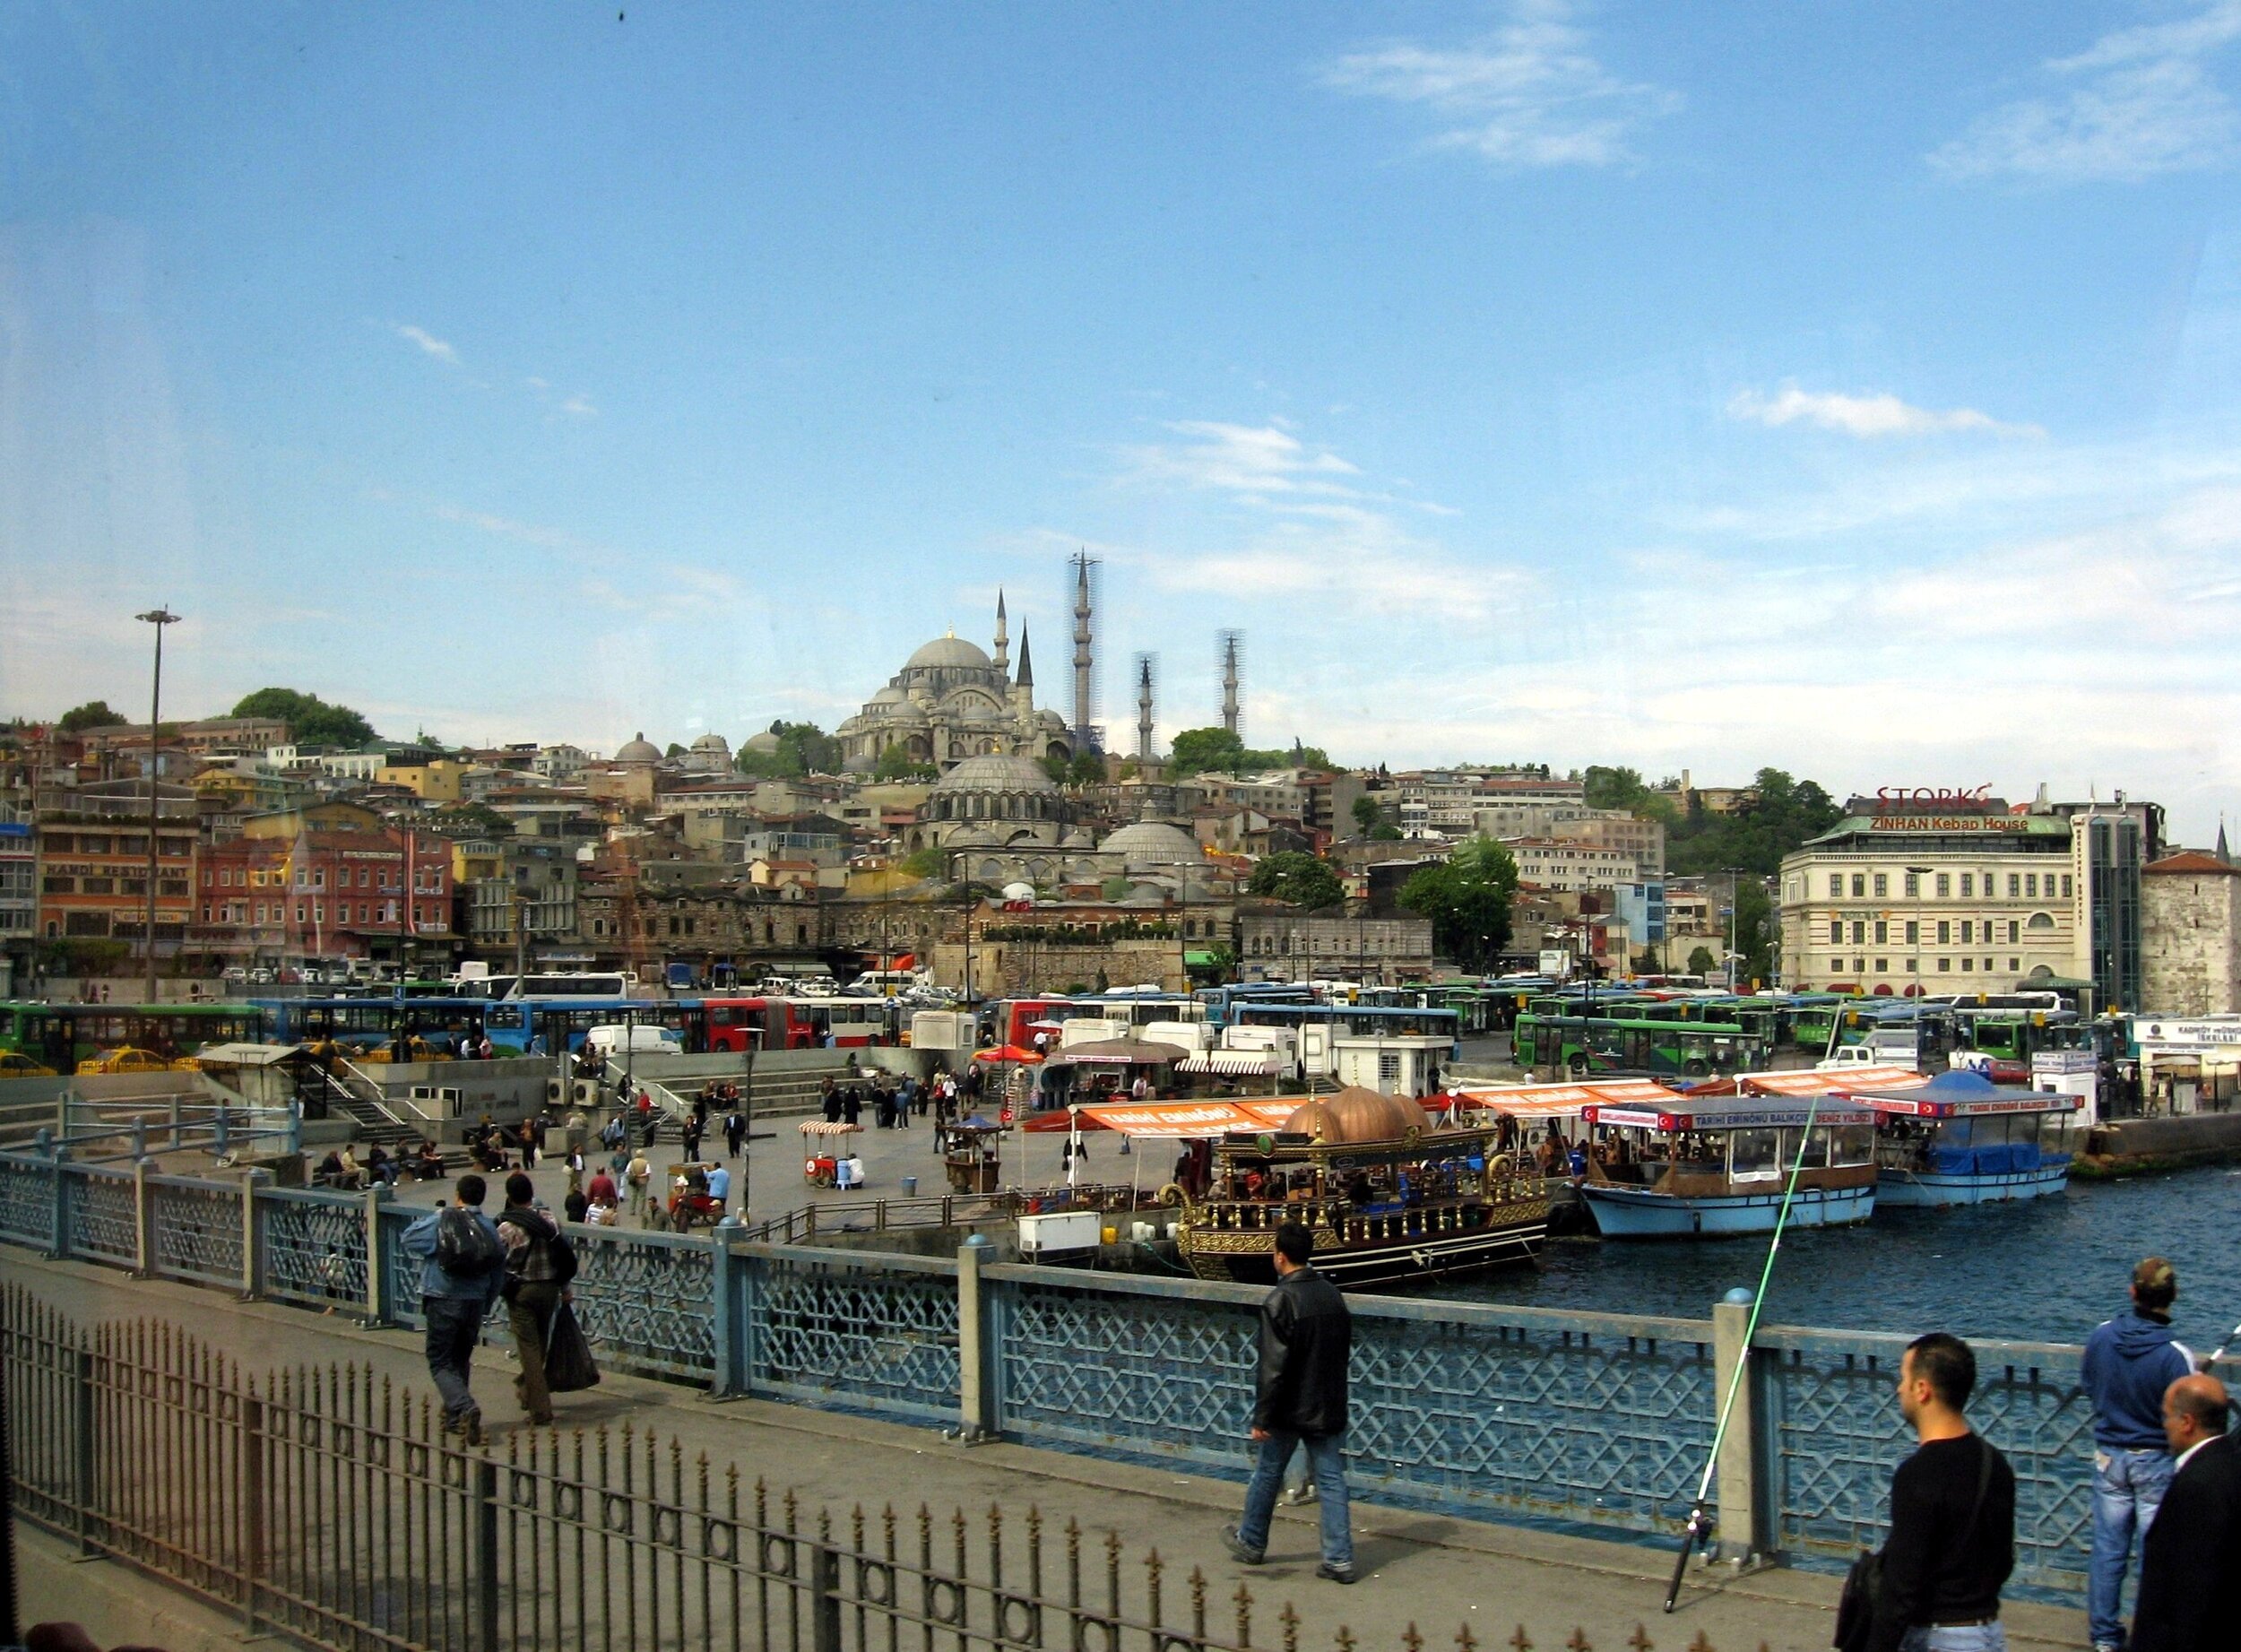 05-15-08 Istanbul Turkey-01.jpg